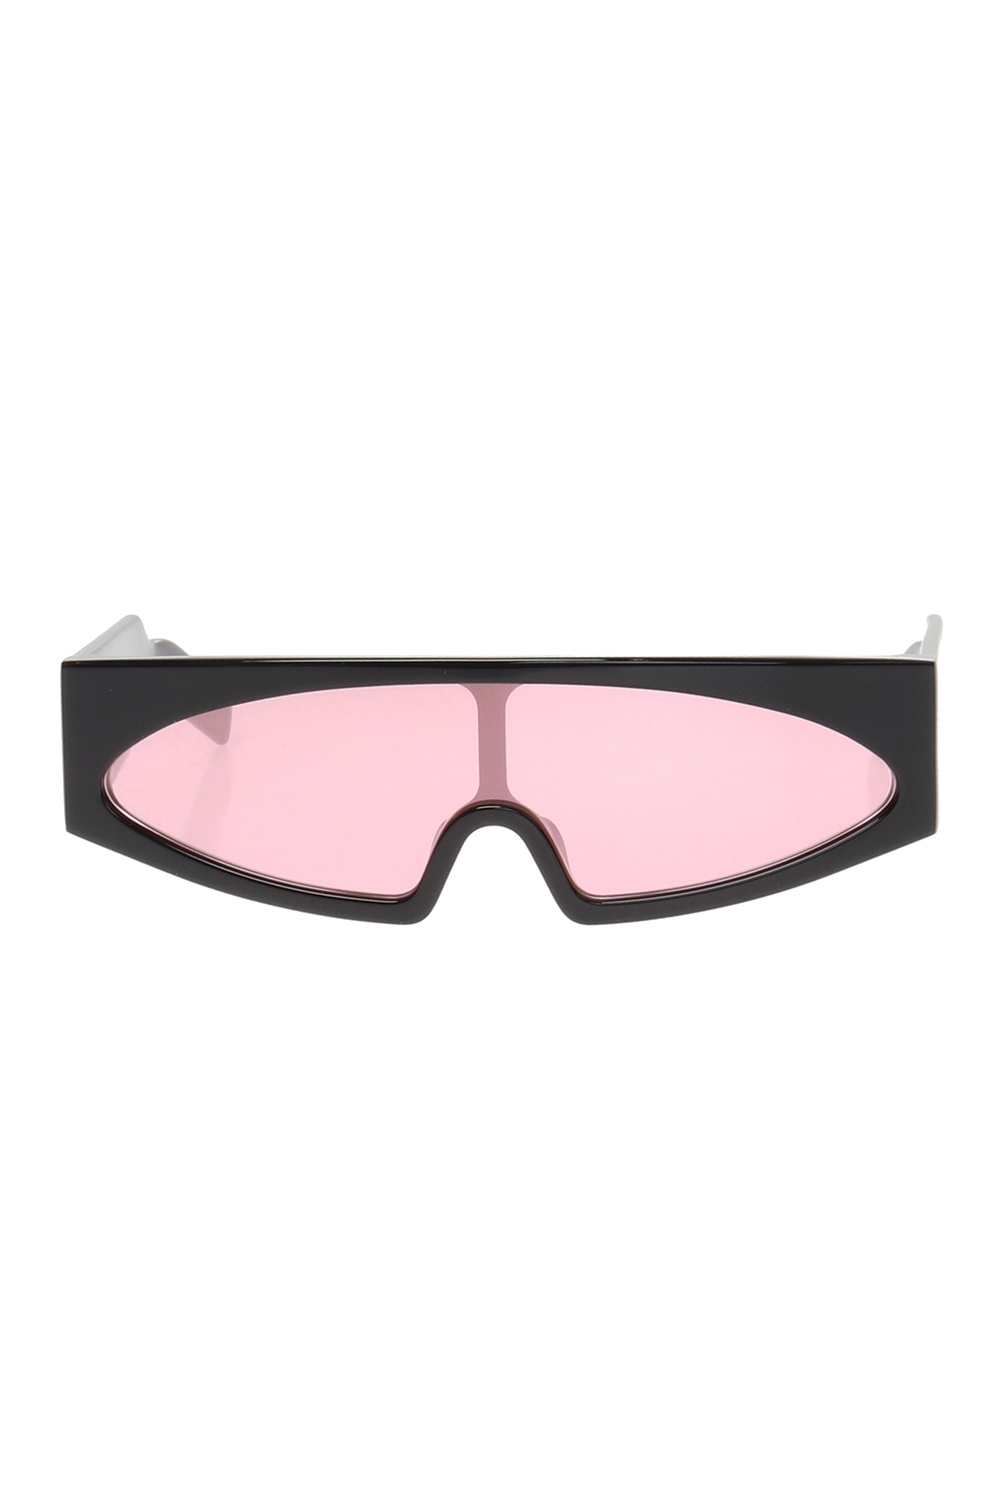 Rick Owens Tommy Hilfiger round-frame sunglasses